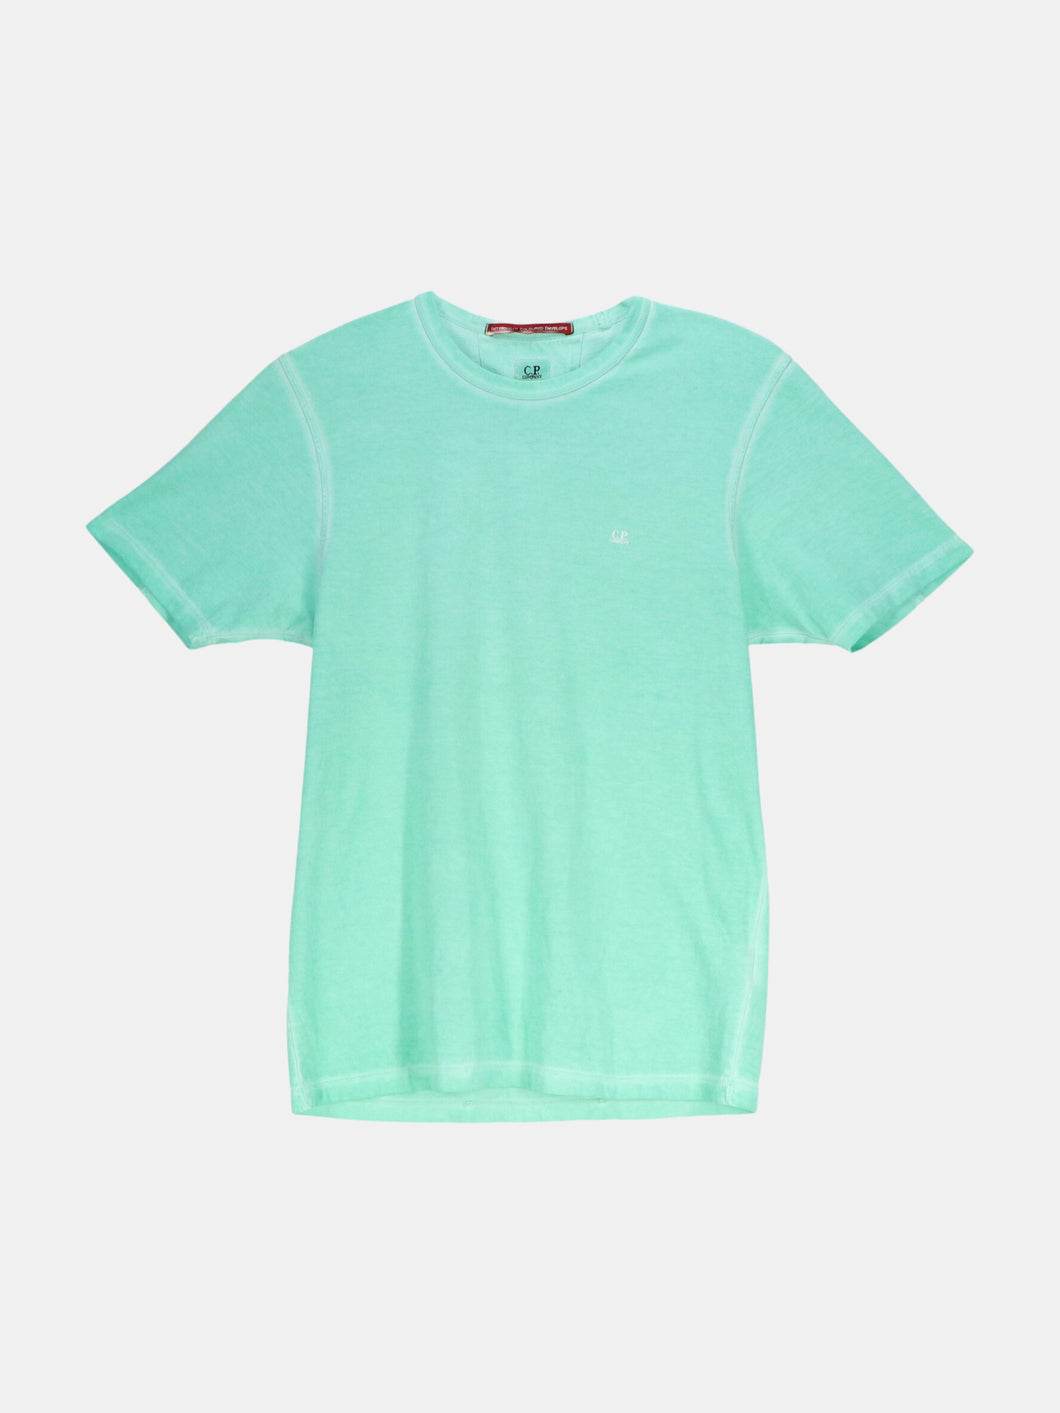 C.P. Company Men's Seafoam Green Jersey Knit T-Shirt Graphic